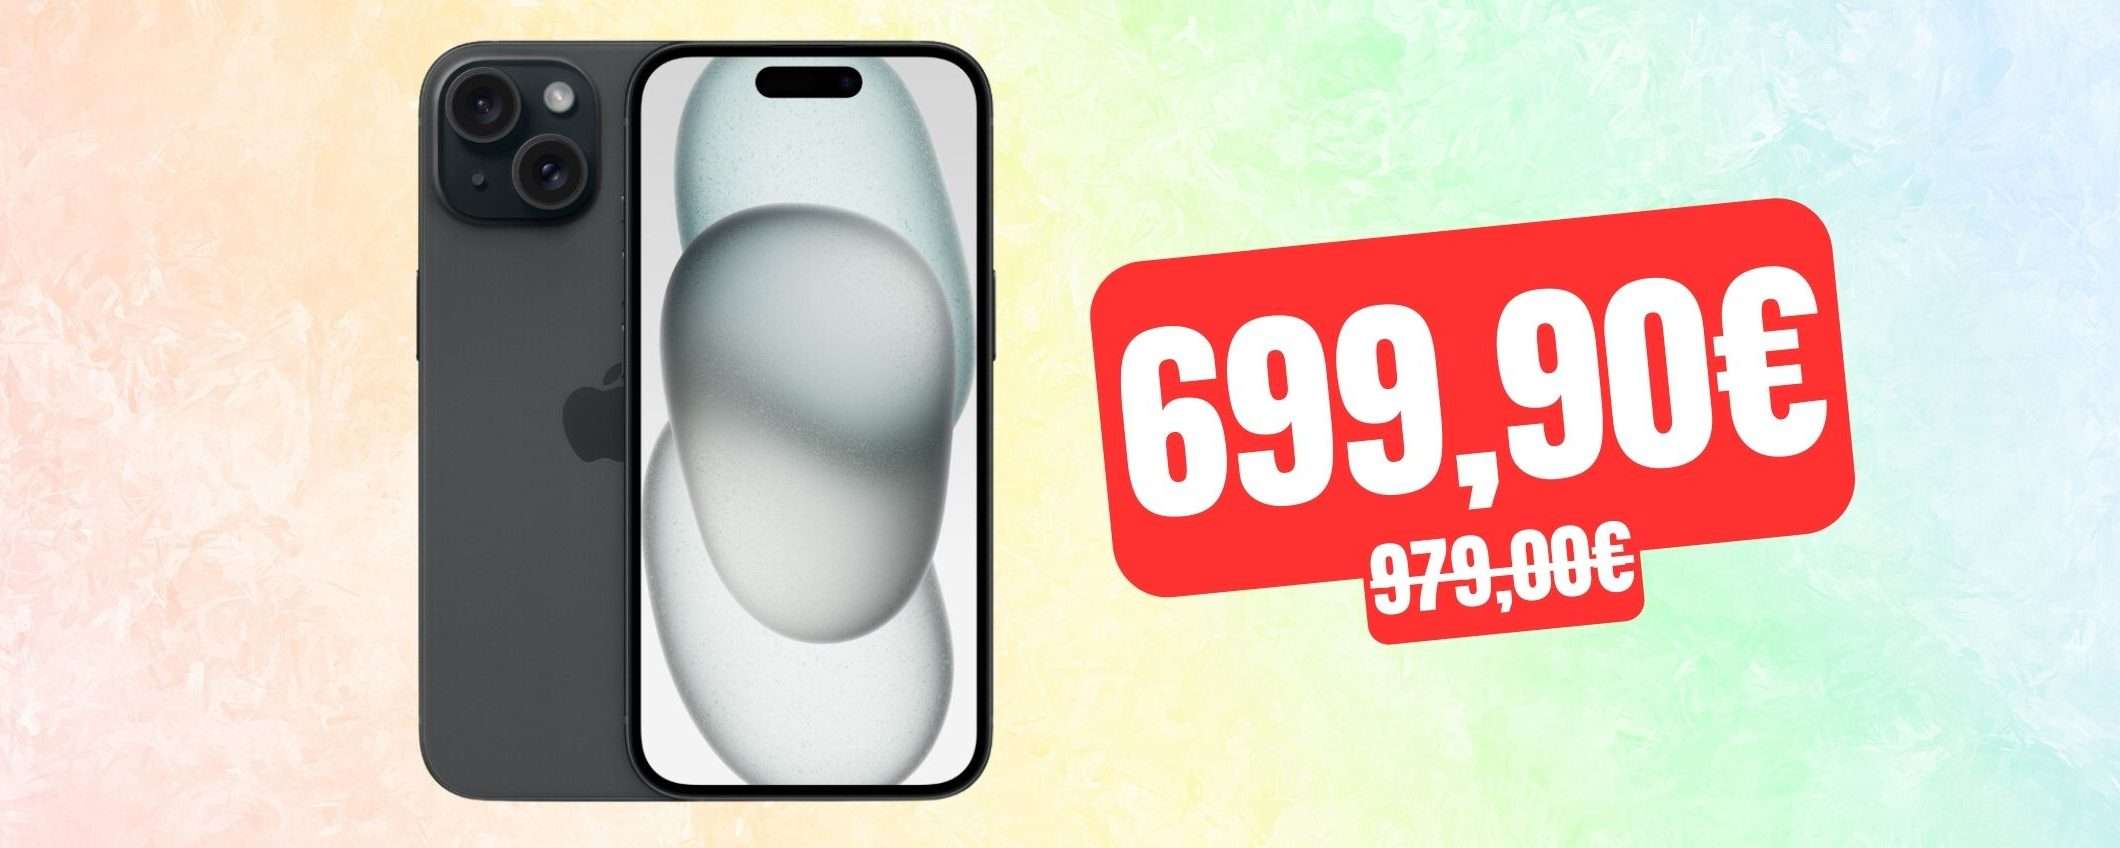 iPhone 15: offerta SHOCK su eBay, tuo a soli 699,90€